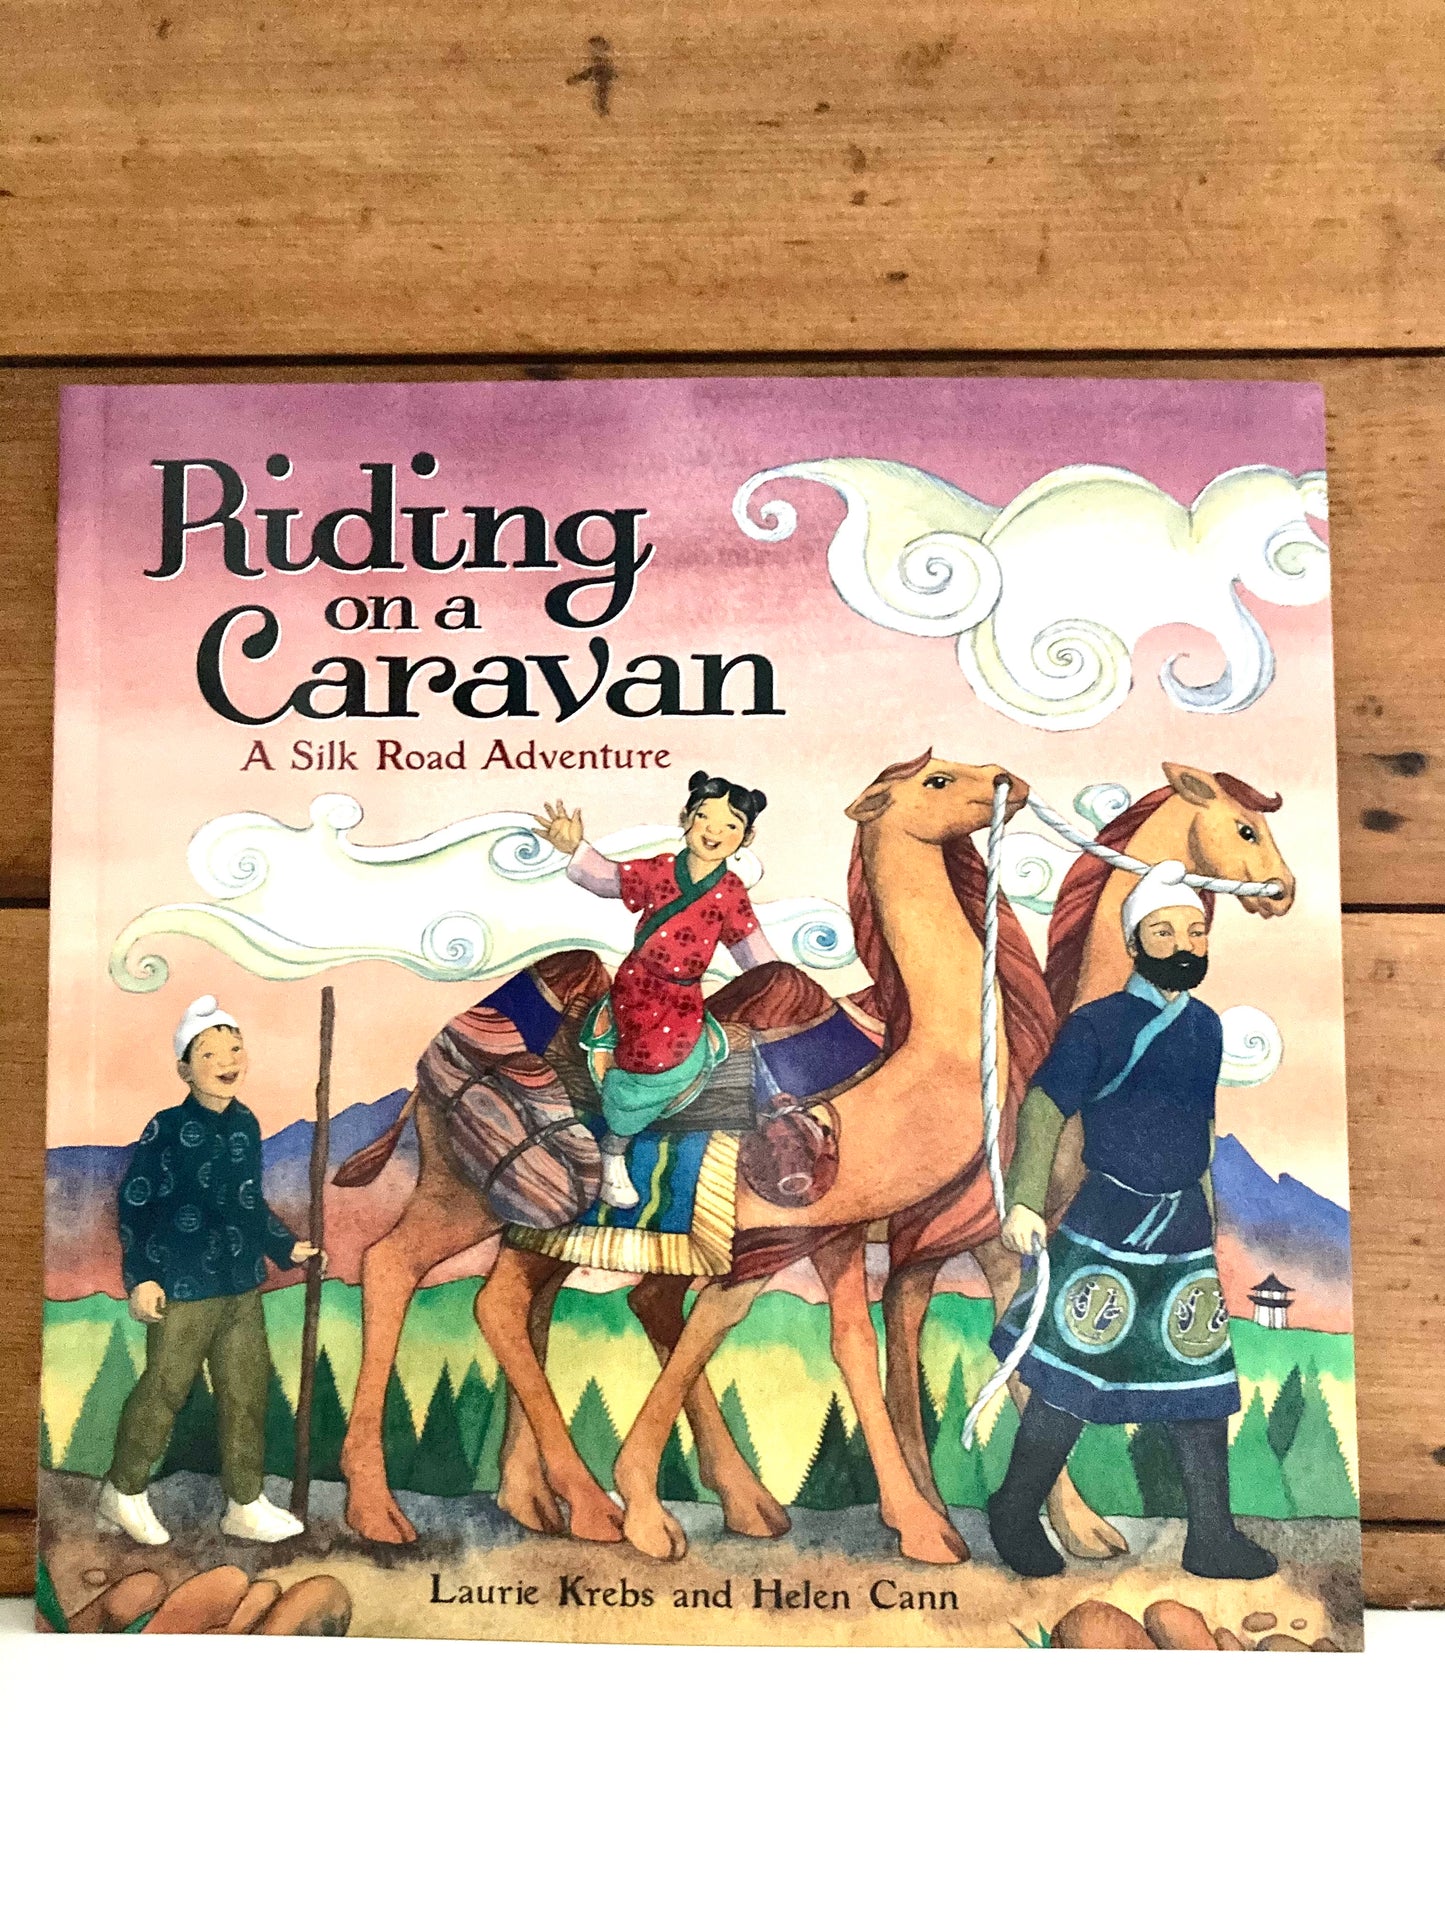 Educational Children’s Picture Book - RIDING ON A CARAVAN